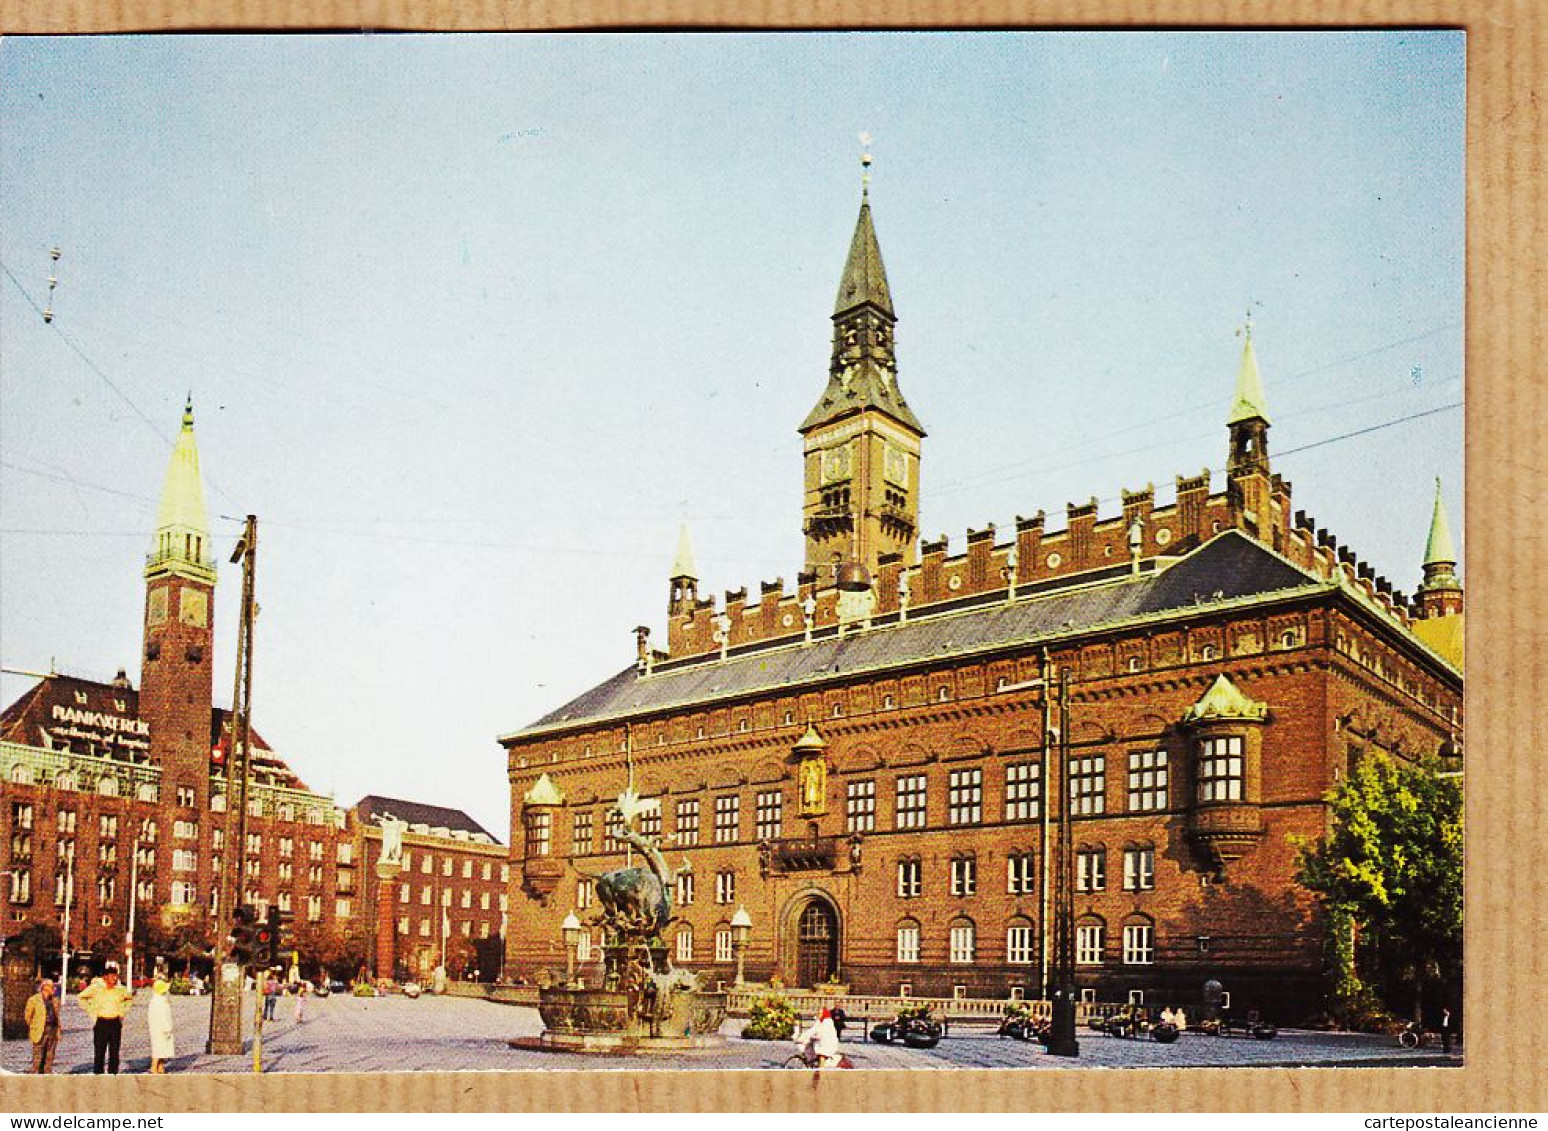 04669 / Danmark COPENHAGEN Kopenhagen Town Hall Square Rathausplatz Denmark COPENHAGUE 1970s - Denemarken